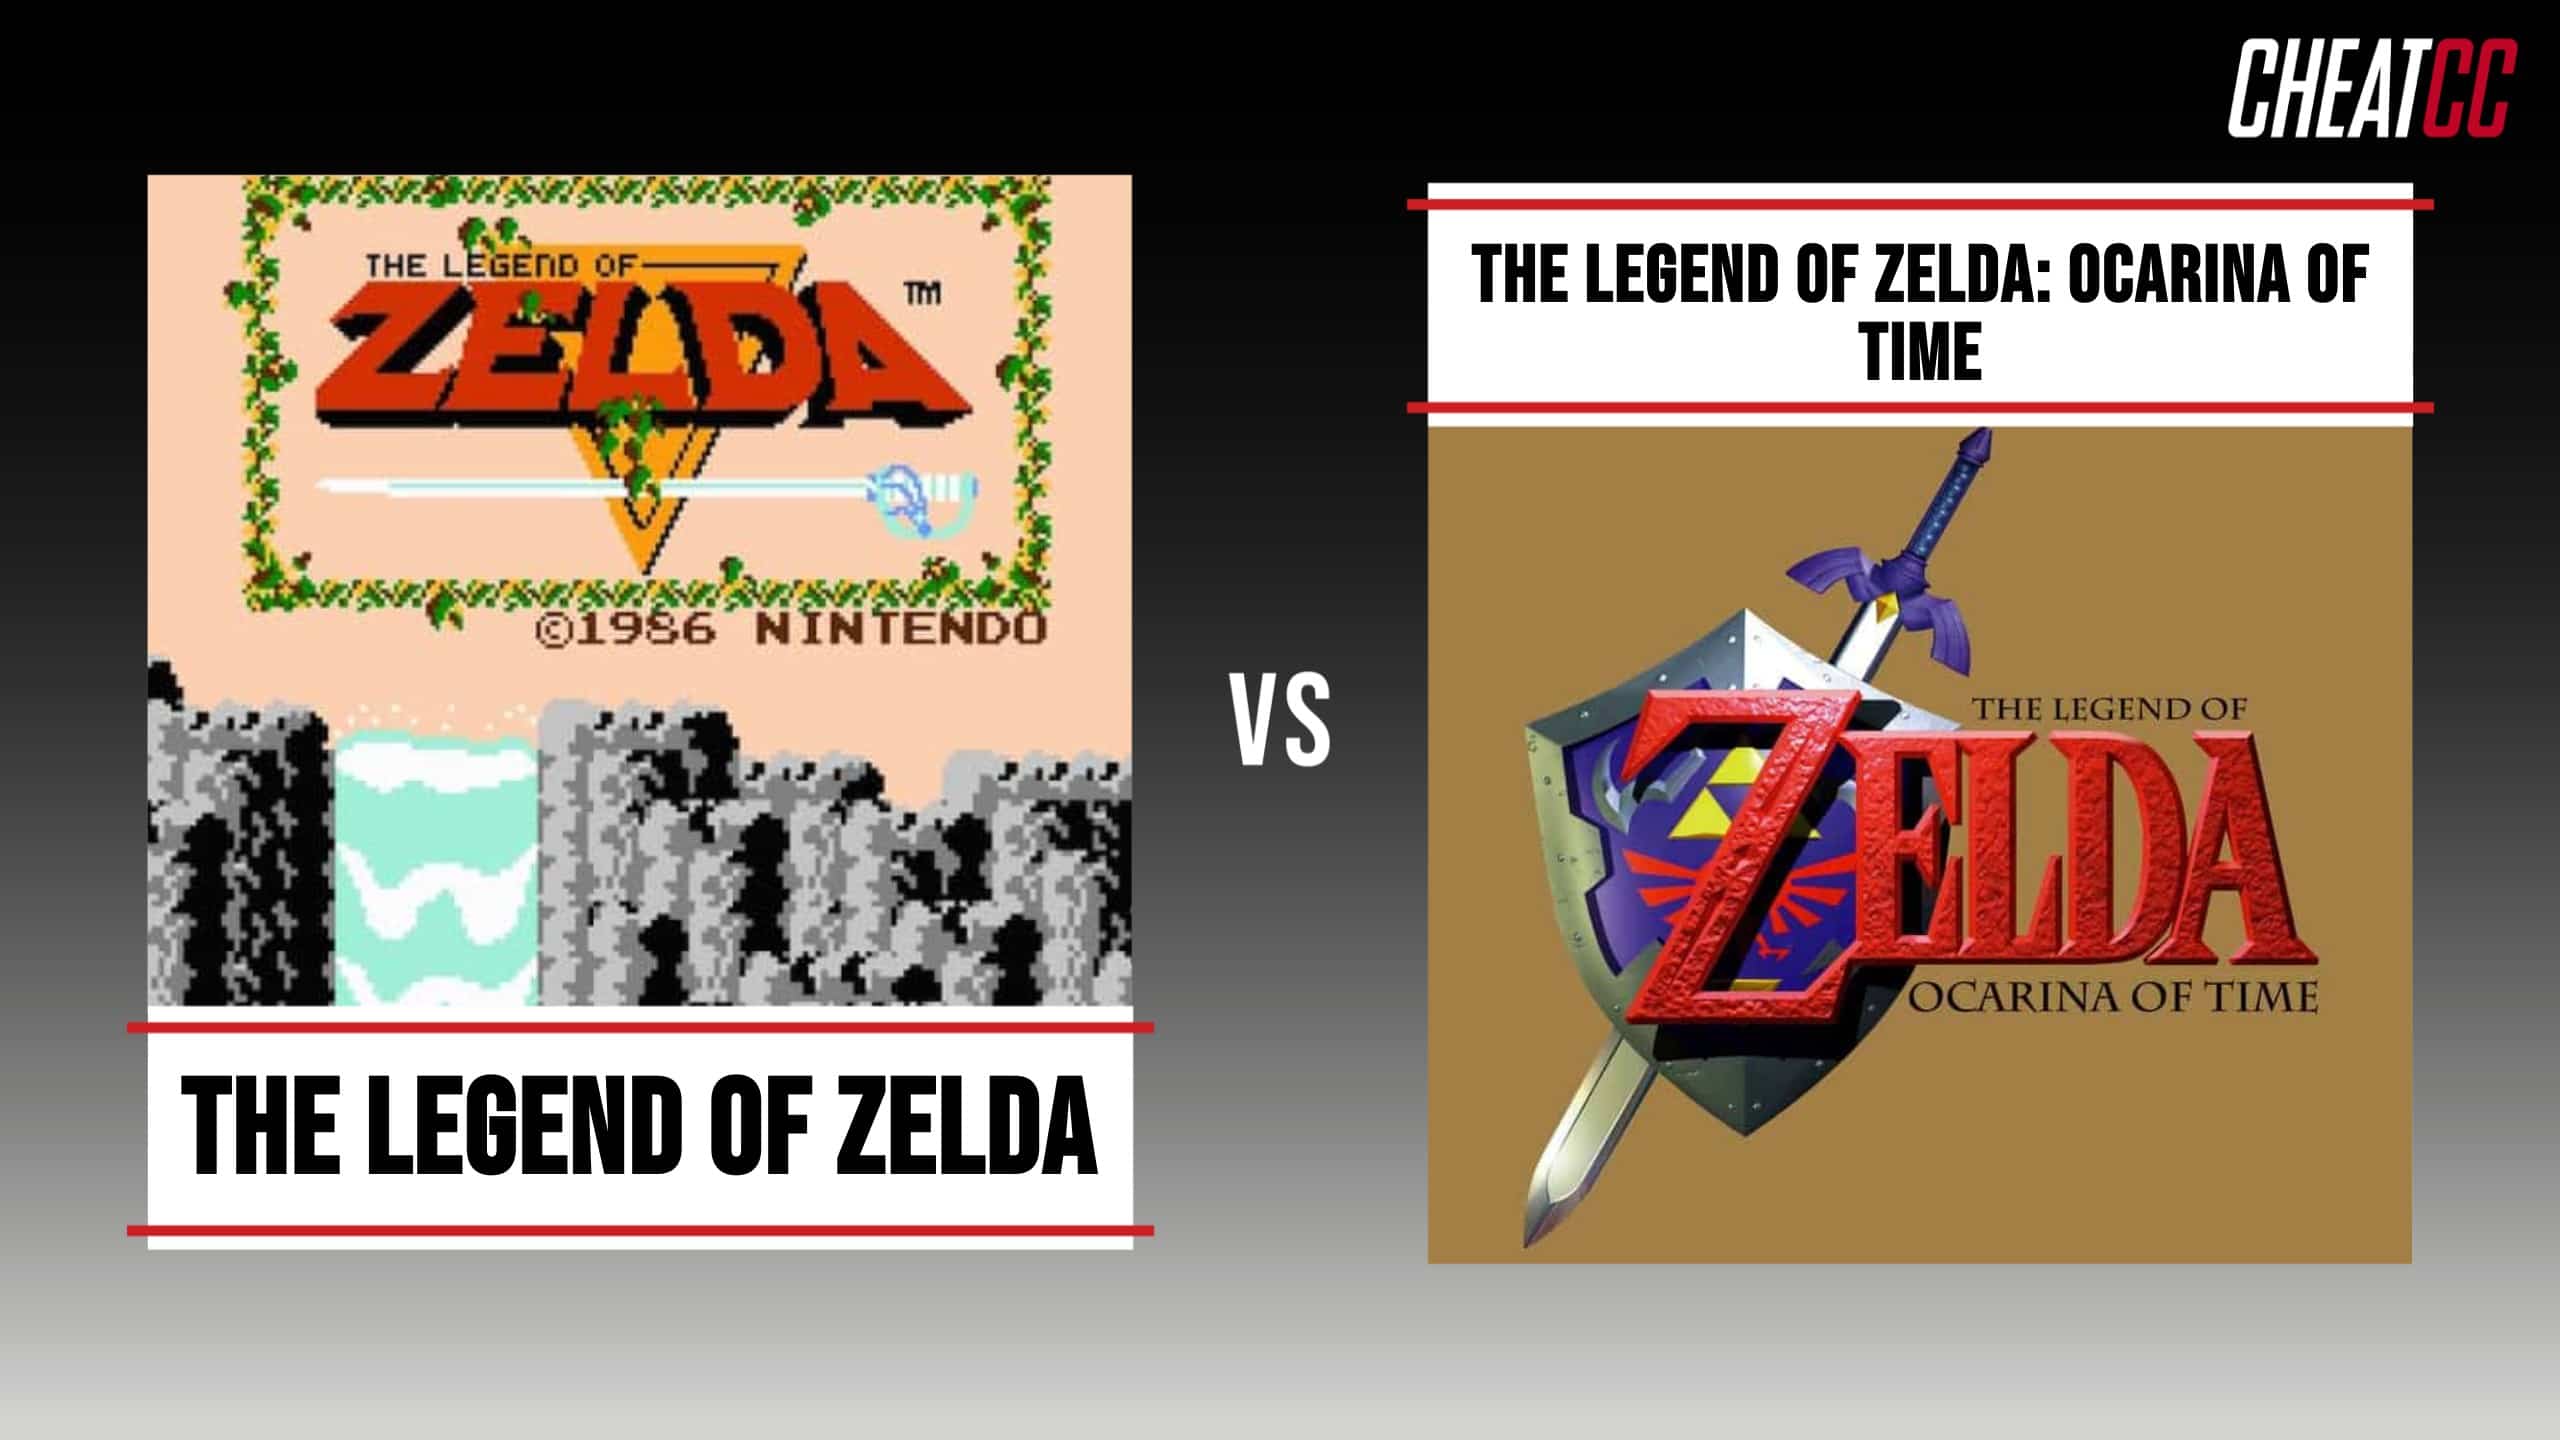 The Legend of Zelda vs Zelda: Ocarina of Time